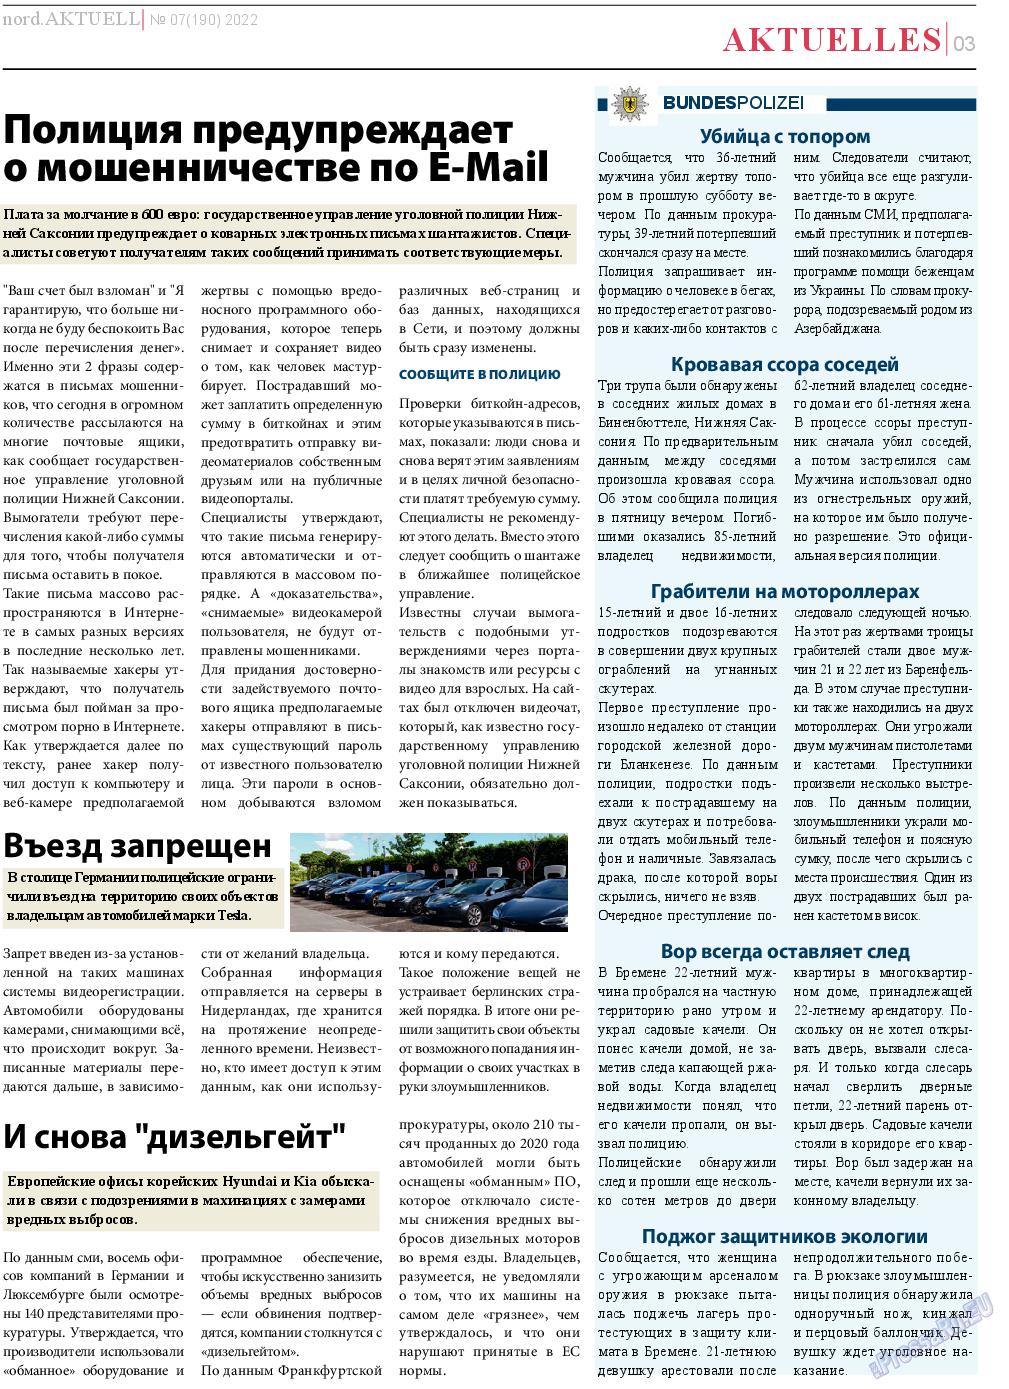 nord.Aktuell, газета. 2022 №7 стр.3